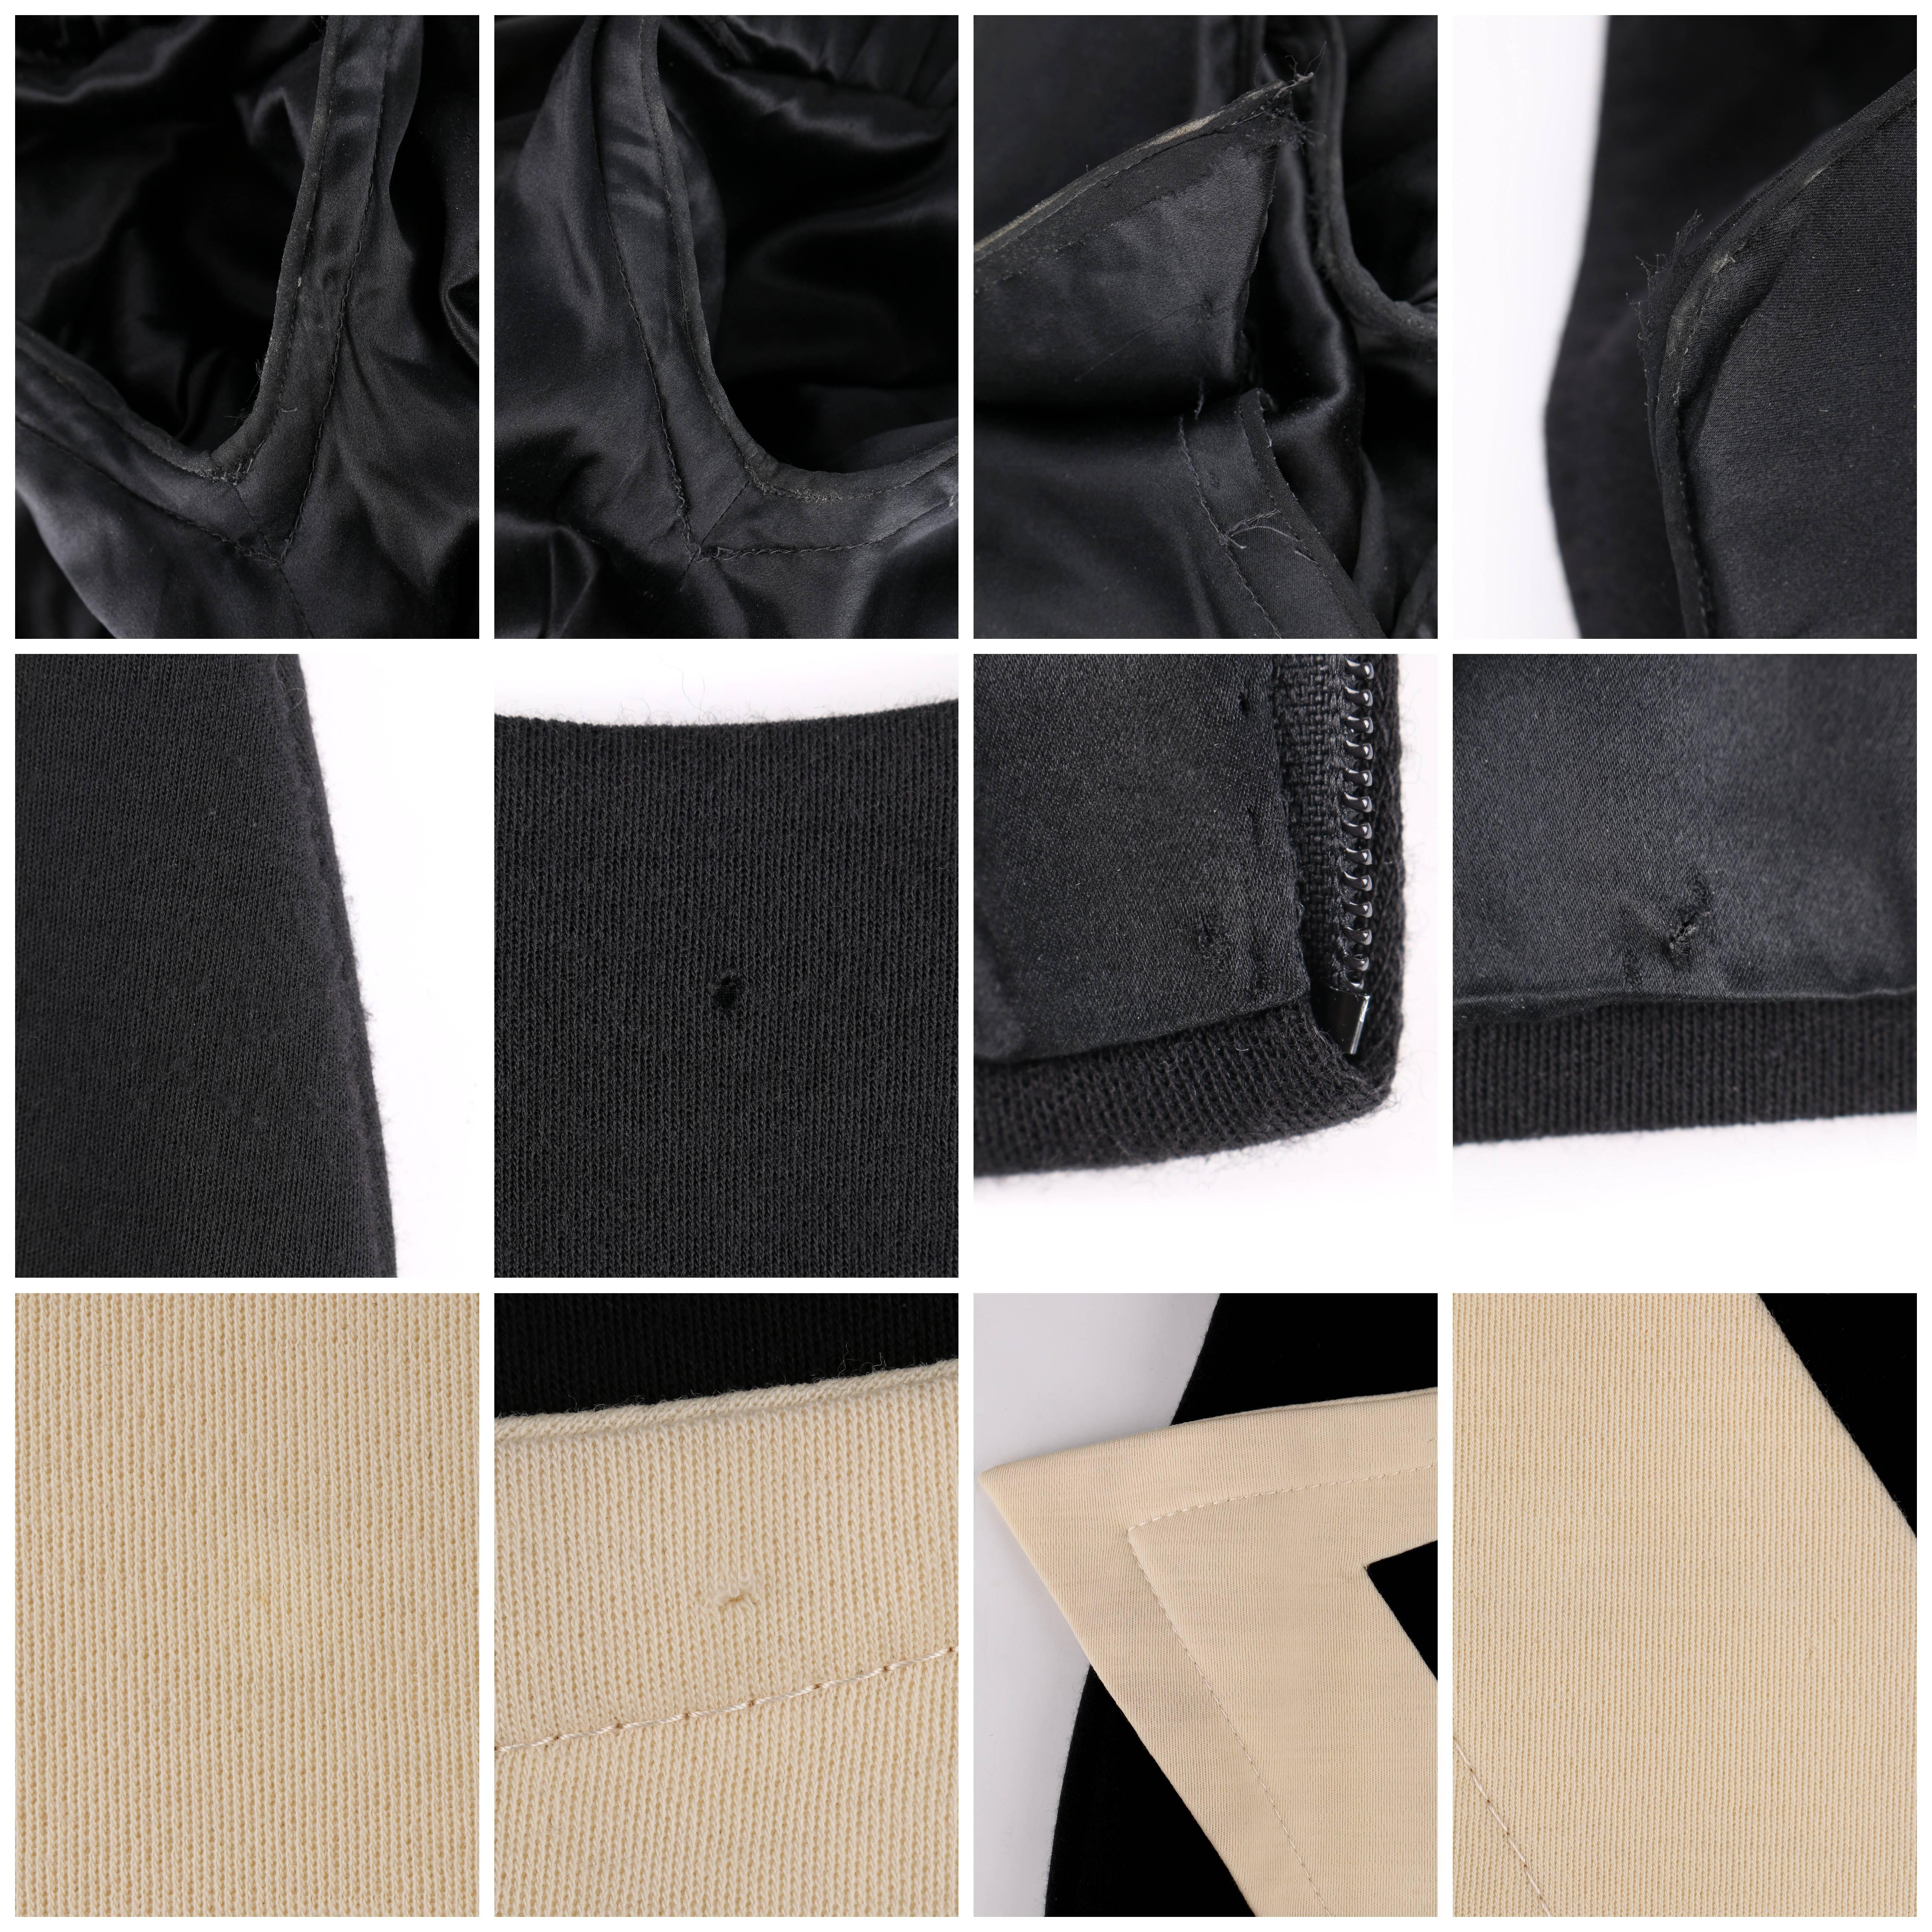 GALANOS c.1980's Black Ivory Avant Garde Zig Zag Panel Wool Knit Cocktail Dress For Sale 5